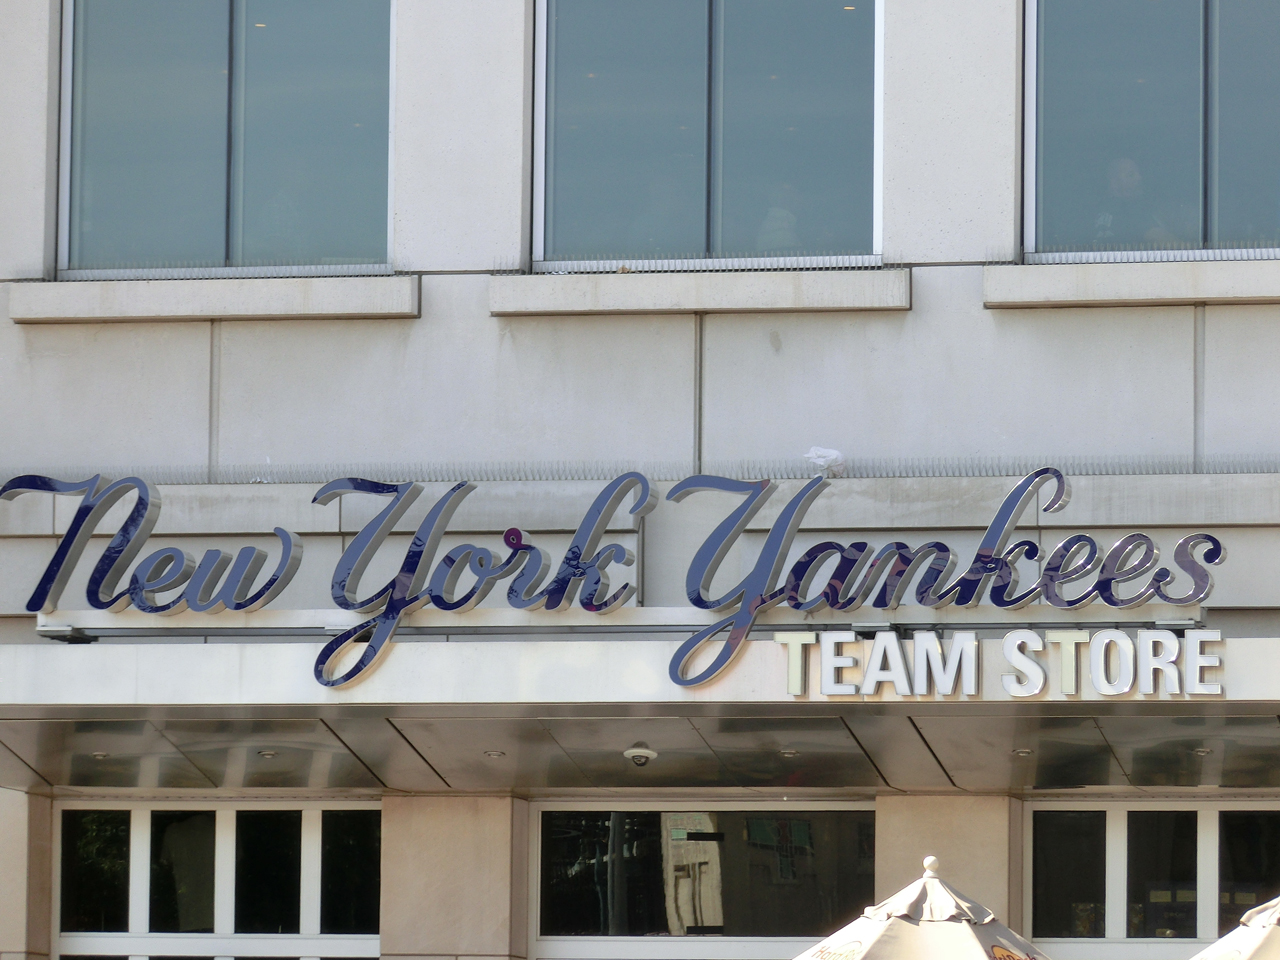 Team Store: Der Fan Store am New York Yankees Stadion